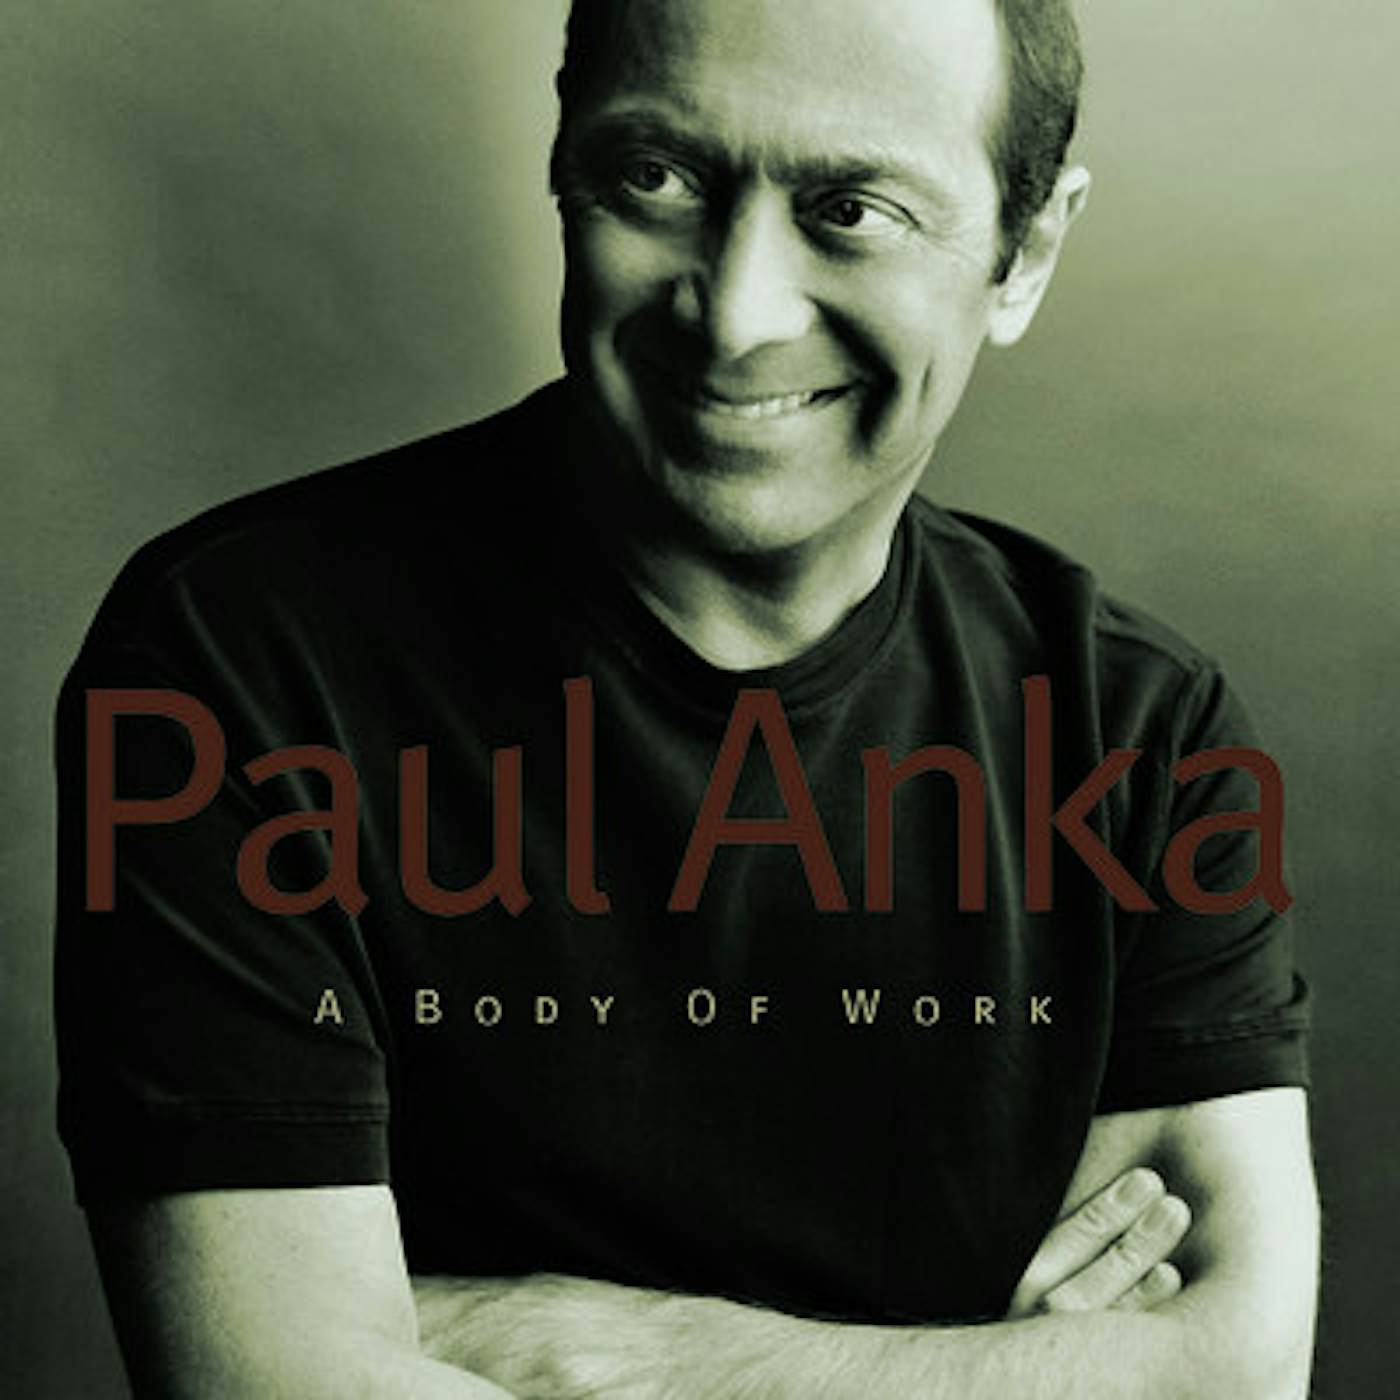 Paul Anka BODY OF WORK CD